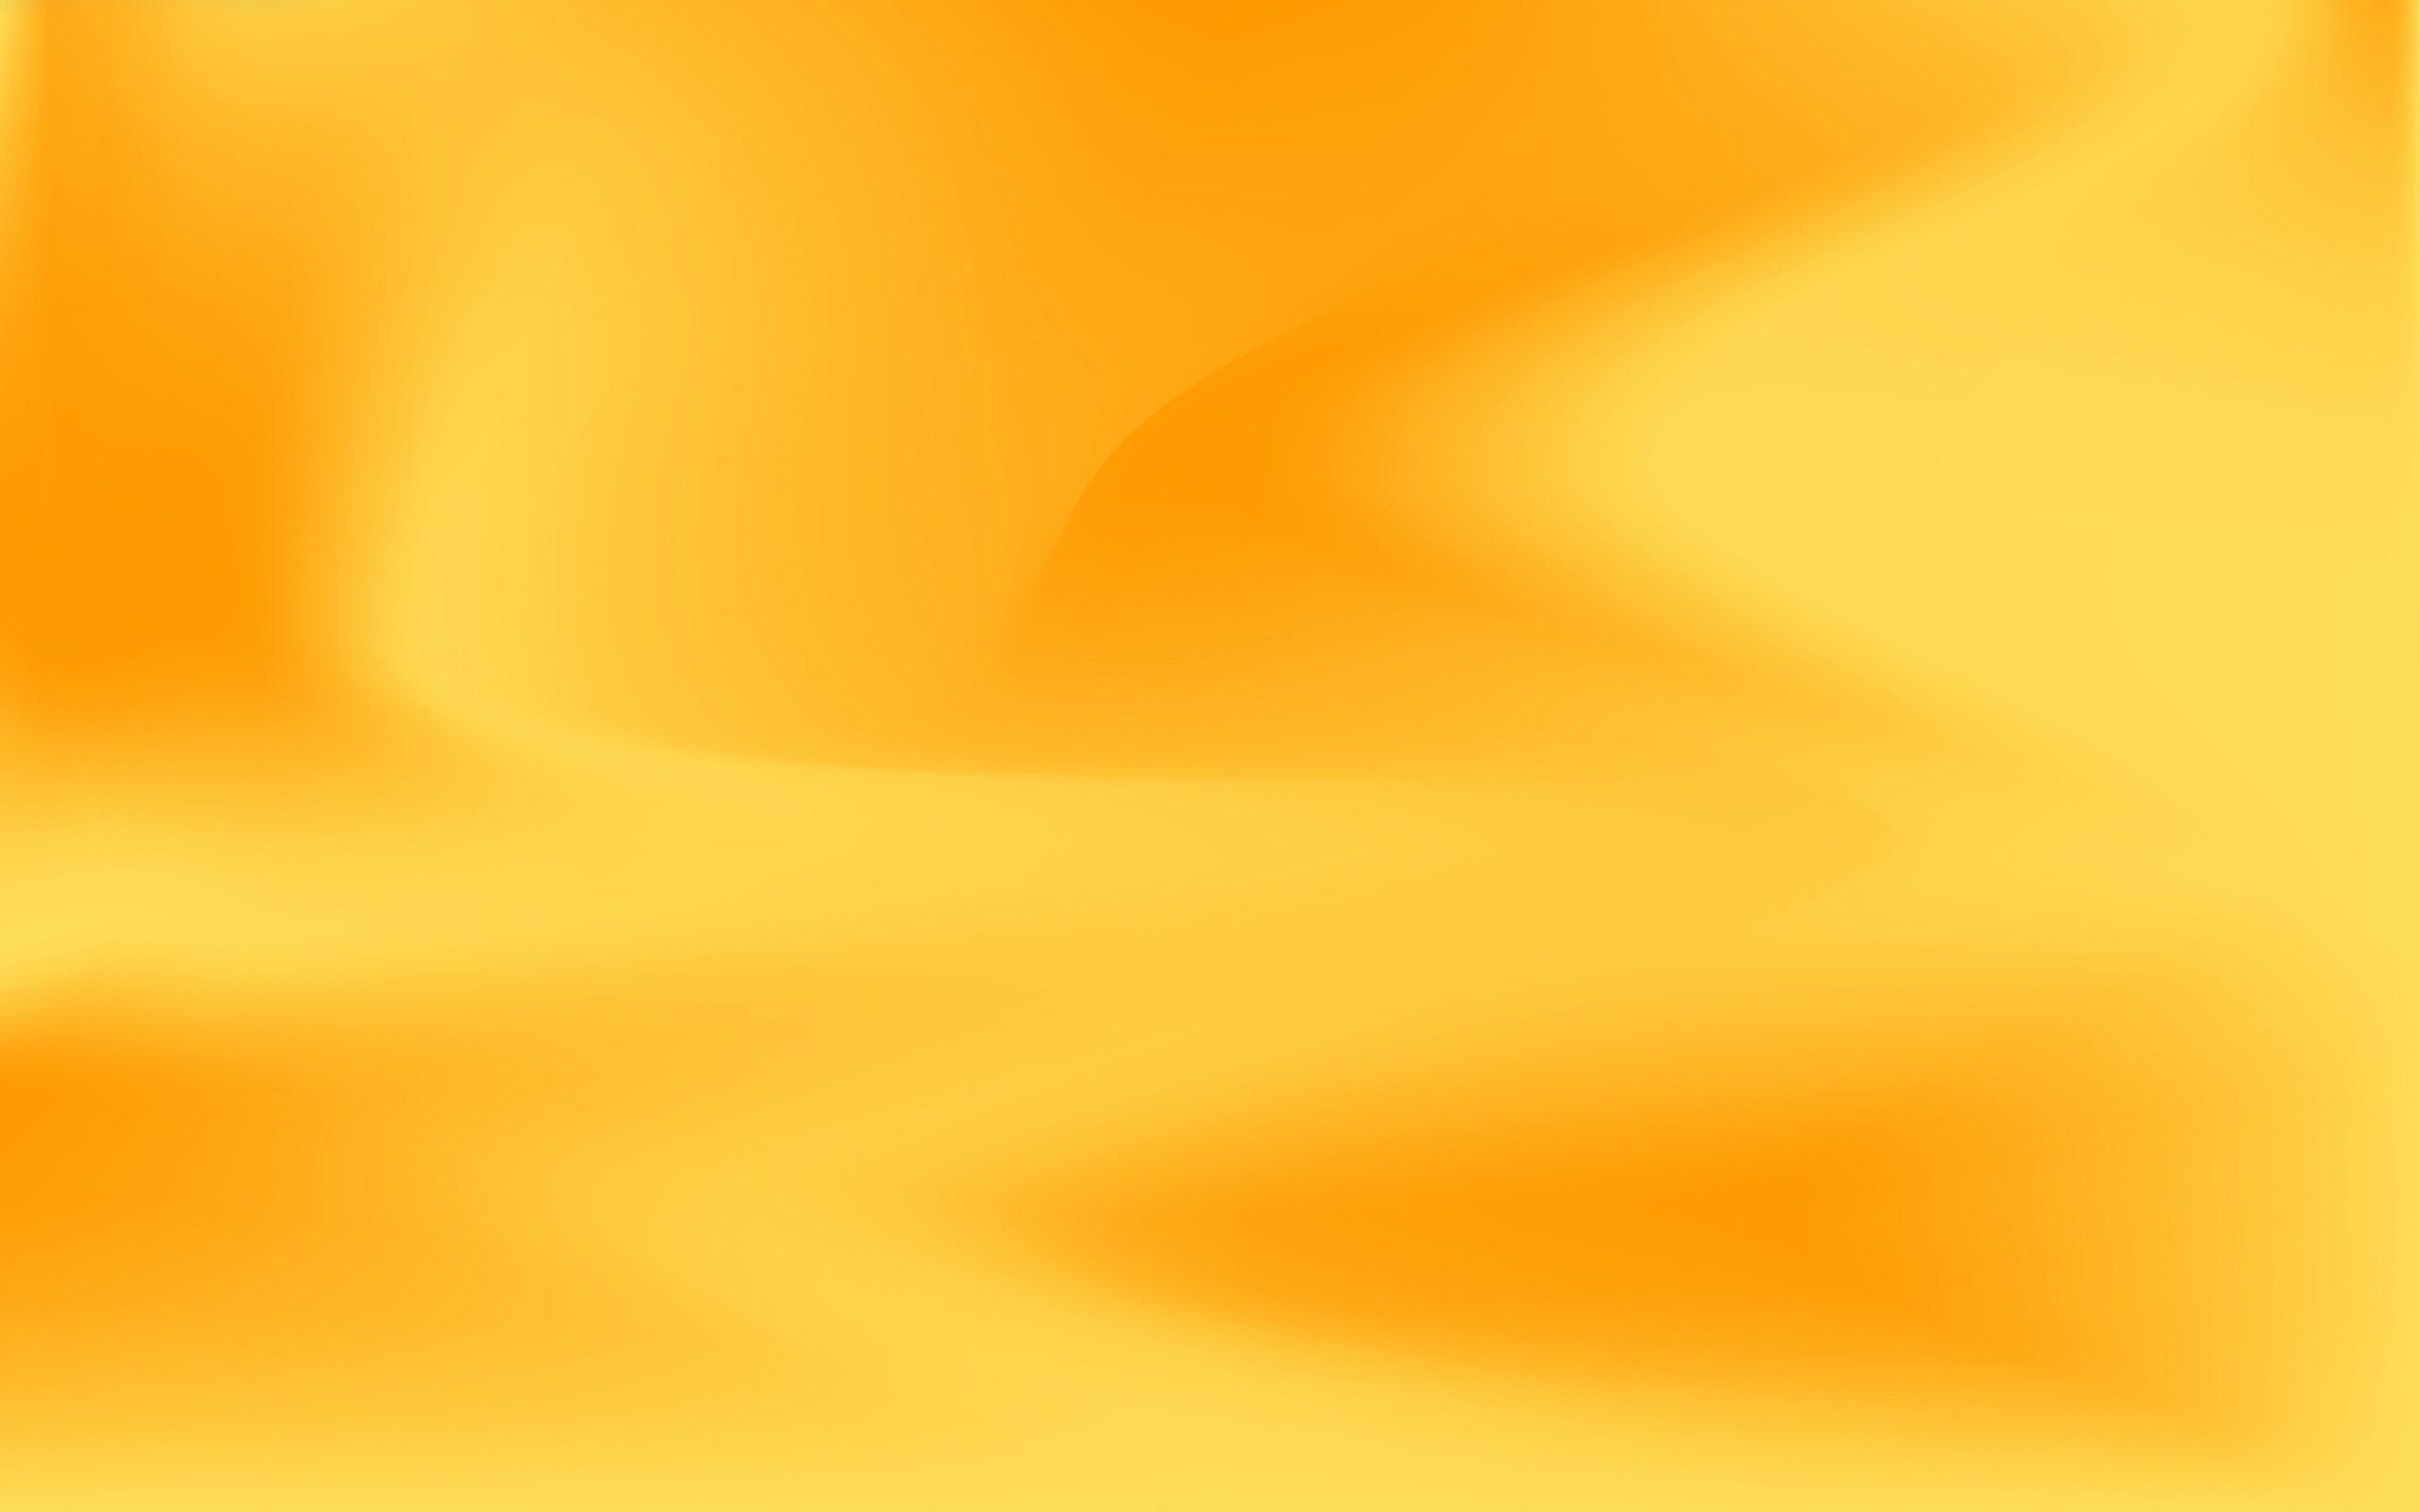 Cool Orange Background Designs Image Amp Pictures Becuo